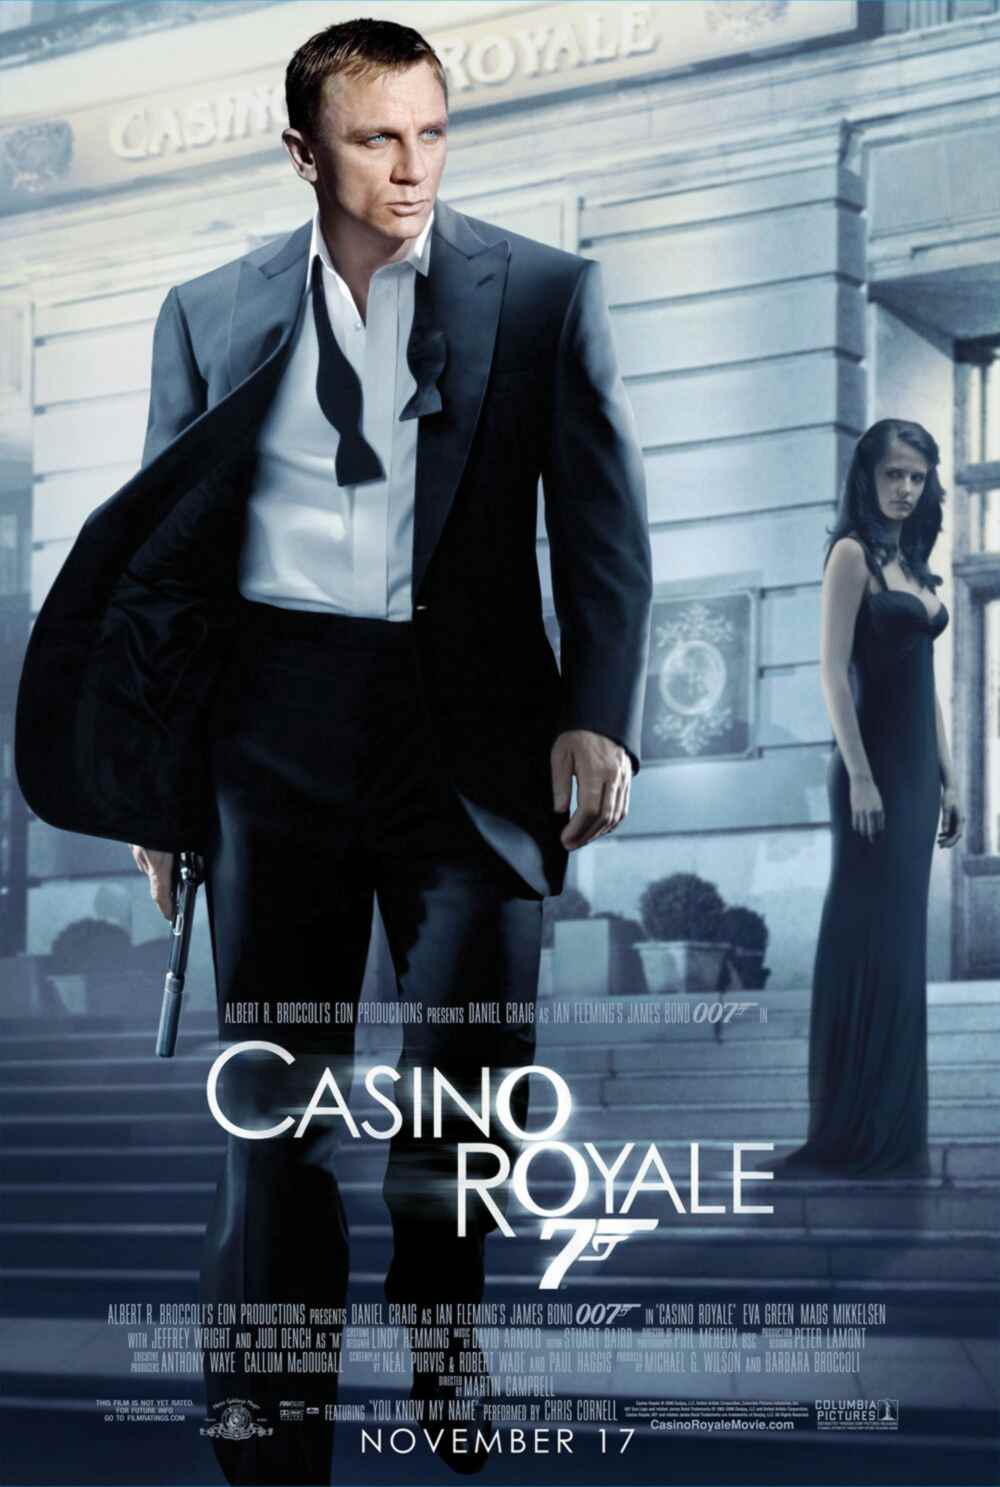 poster del filme casino royale de la saga de james bond_02